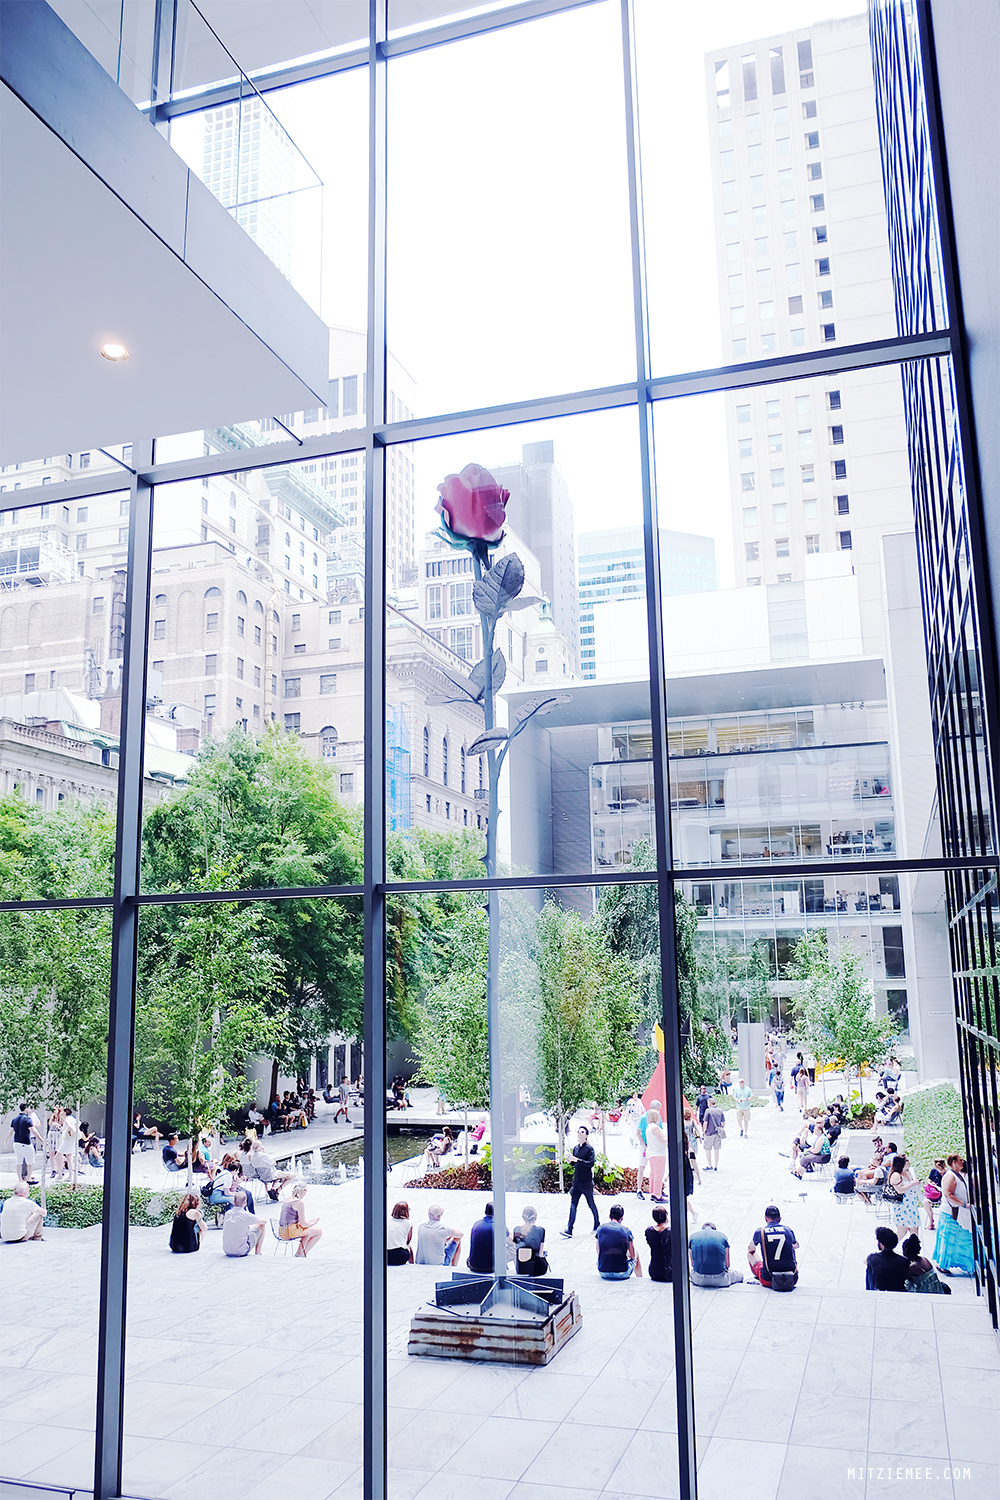 The Sculpture Garden at MoMA, New York